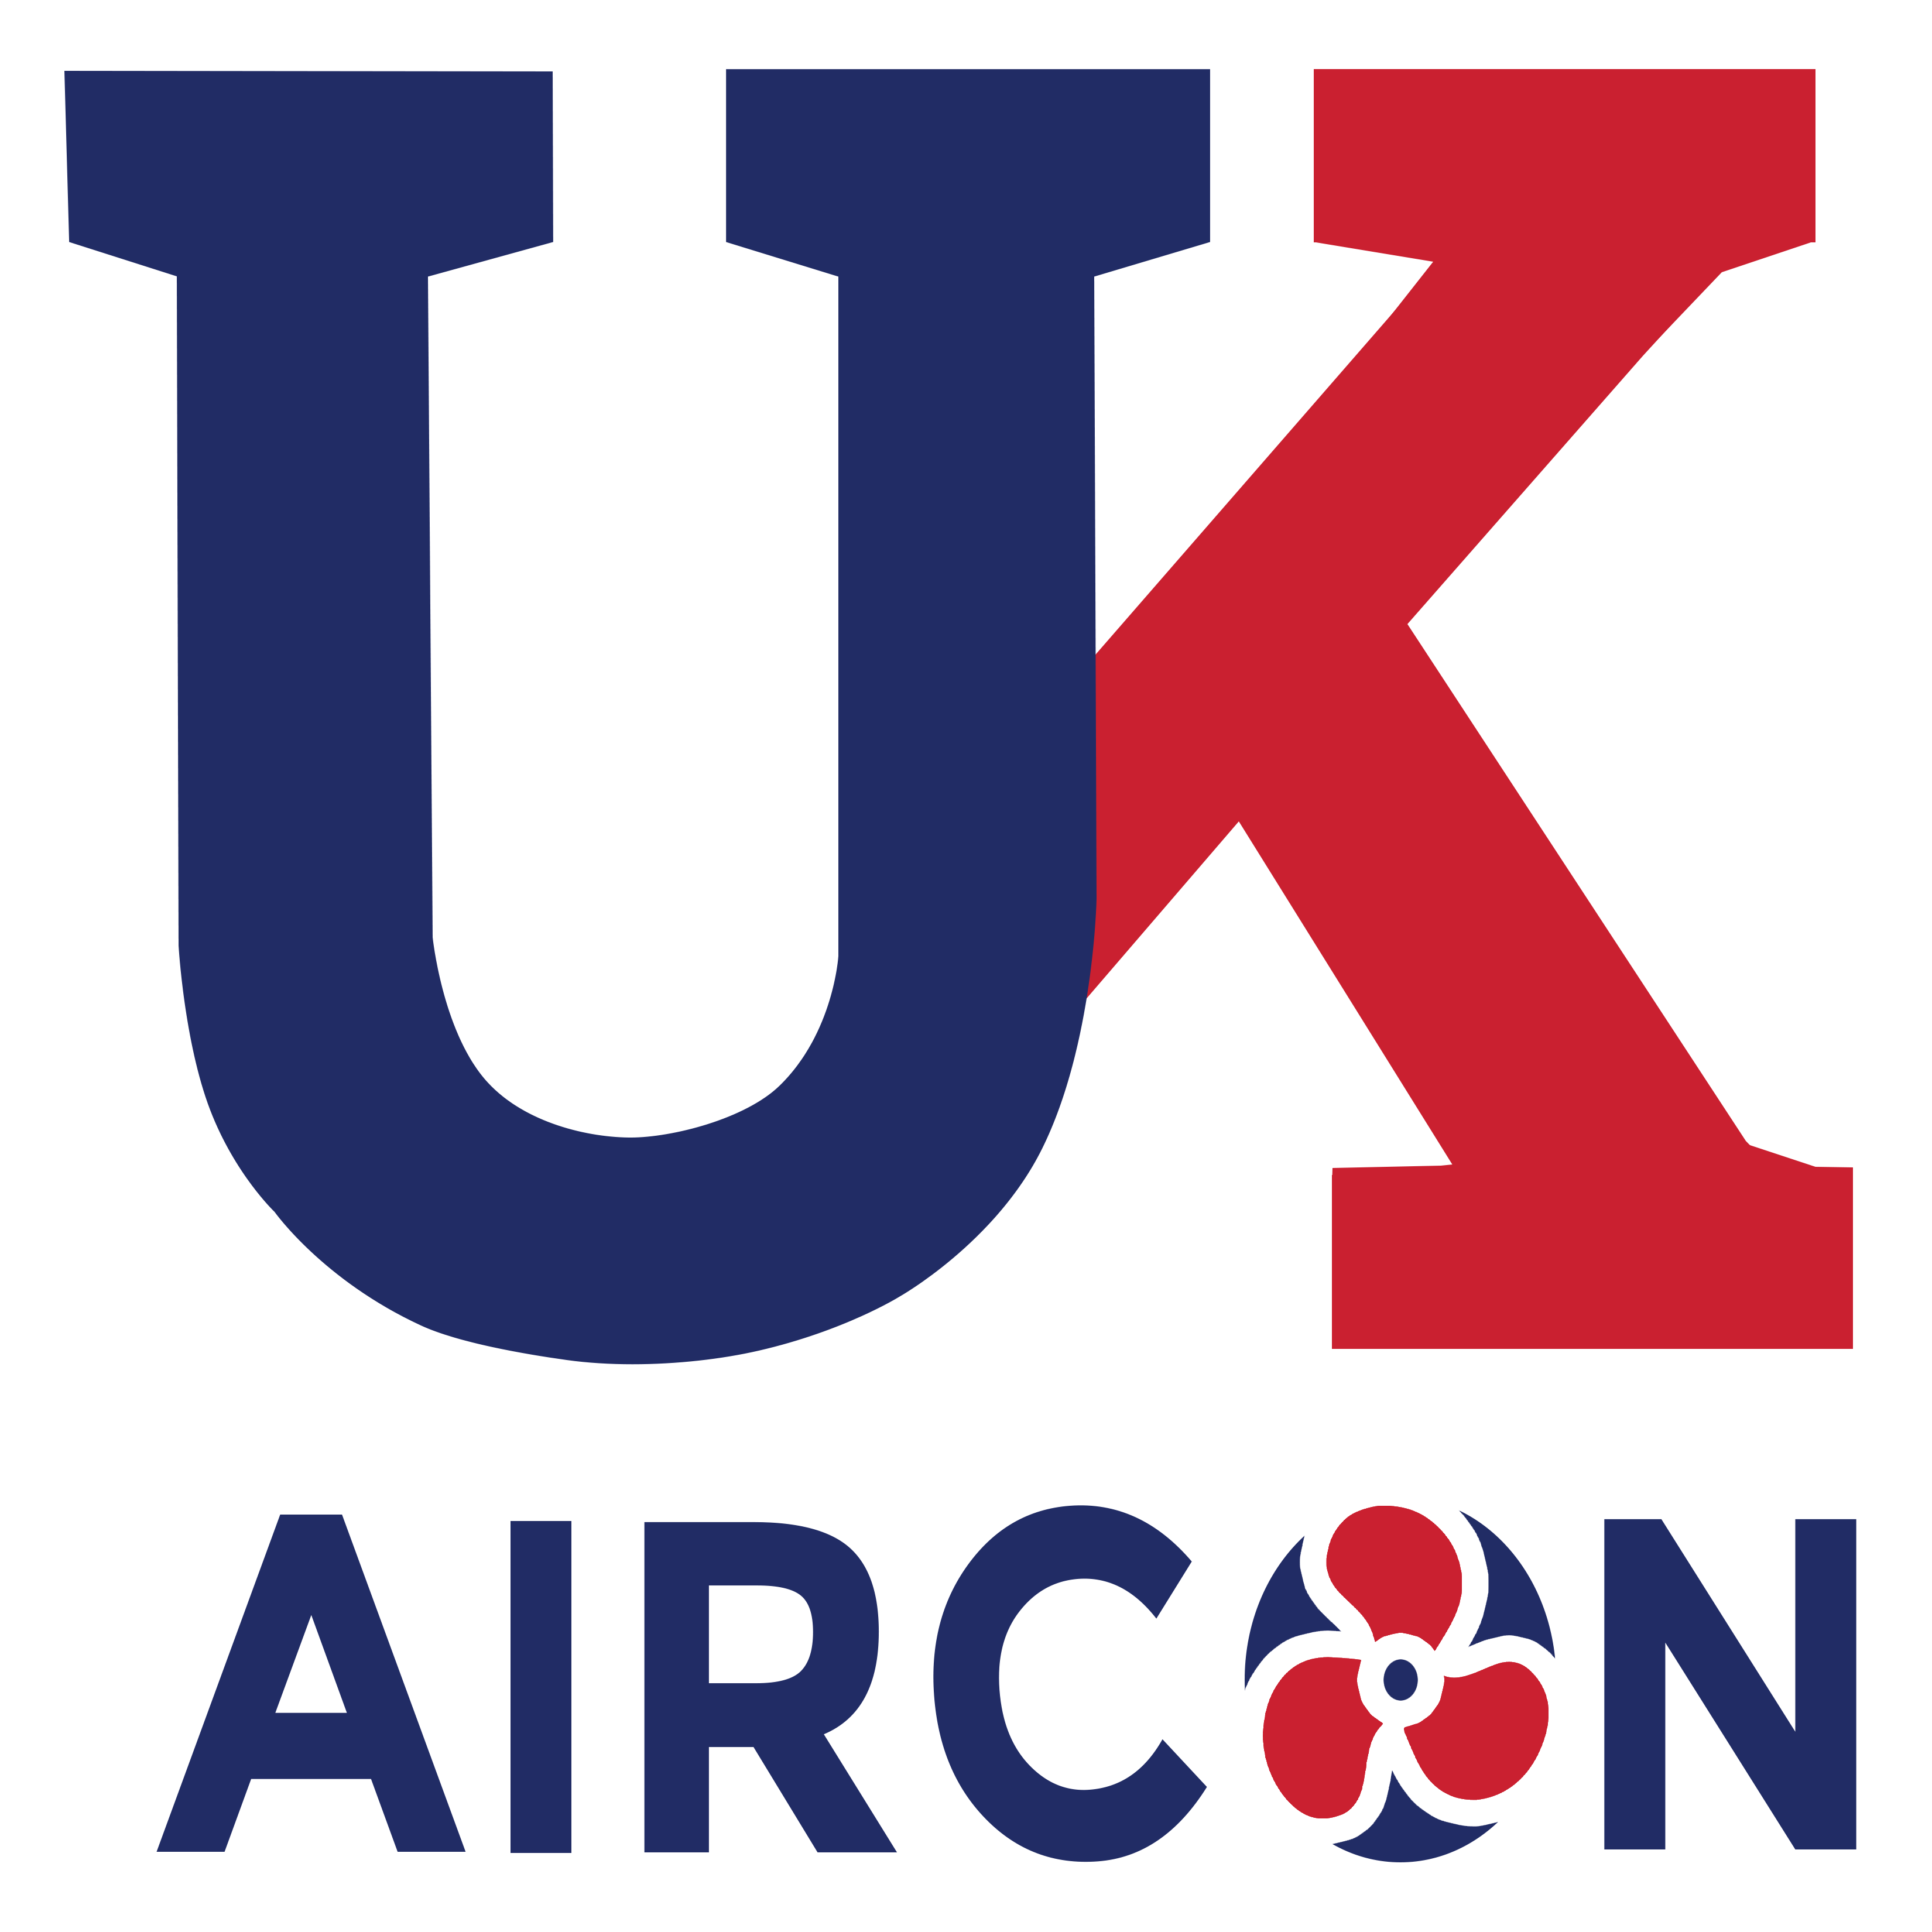 UK Aircon – Air Conditioning Installation, Service & Repair